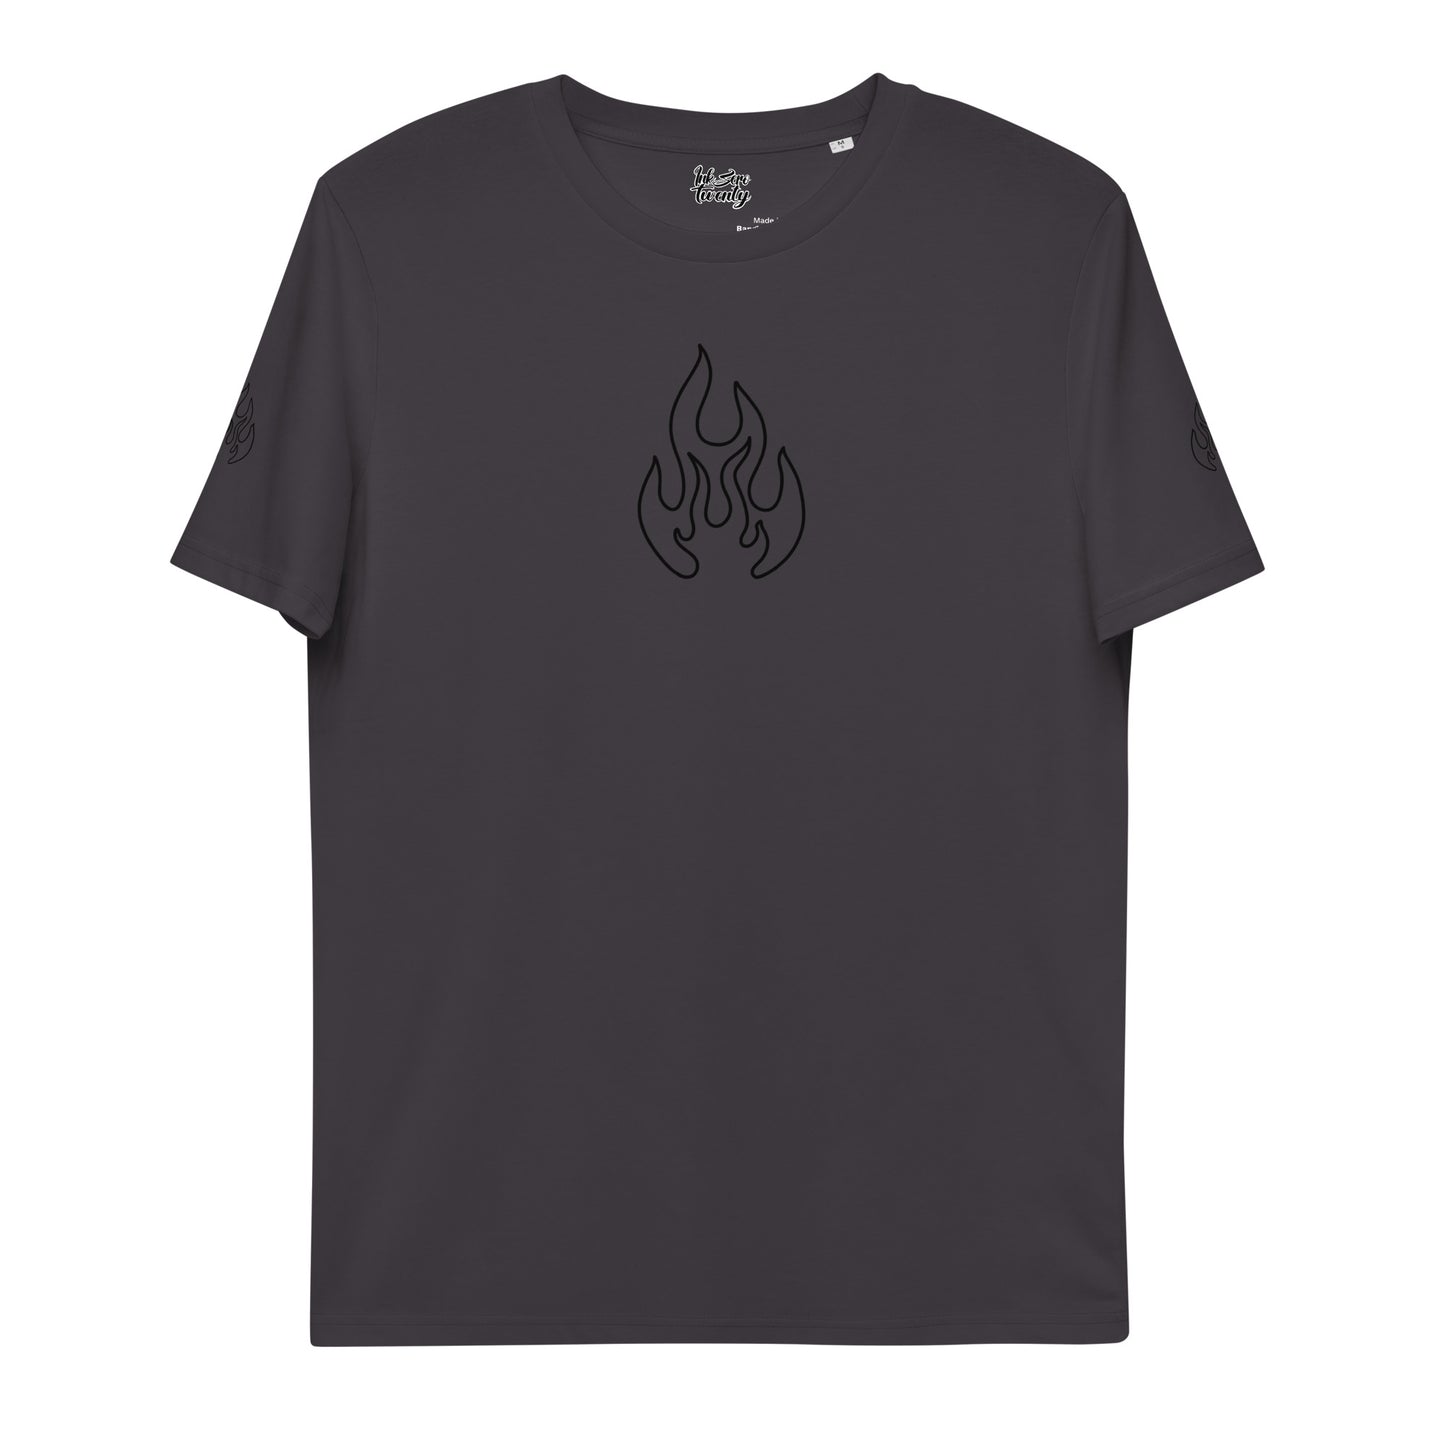 Unisex organic cotton t-shirt black flame tattoo print